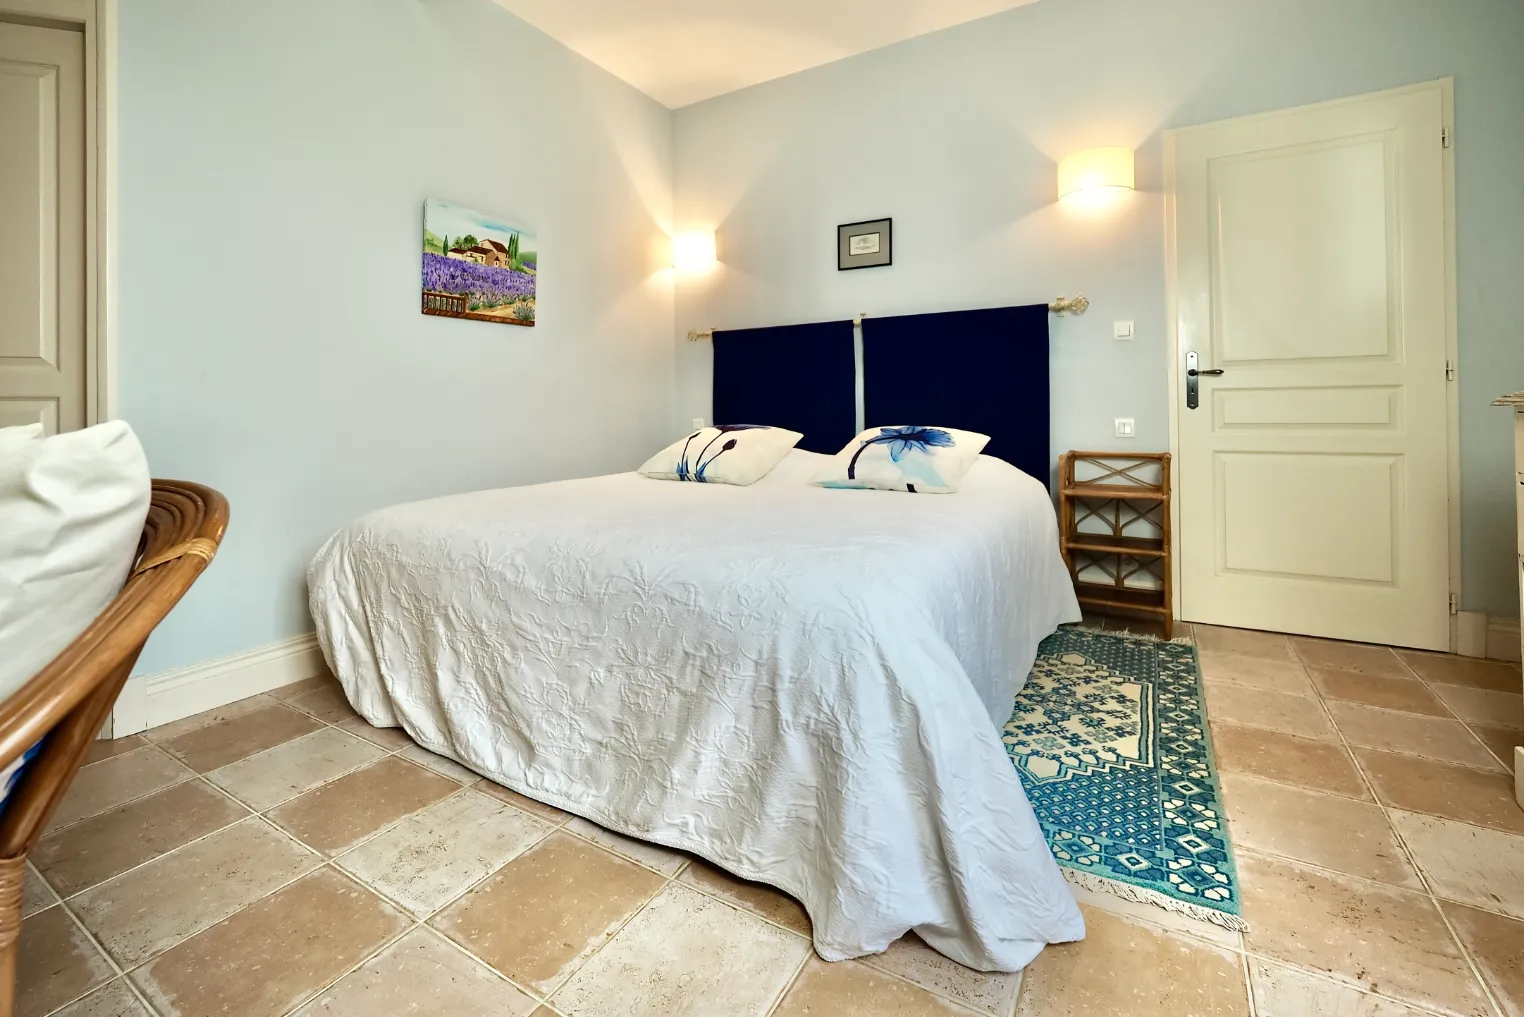 Lavande Room Bed and Breakfast in Charente.